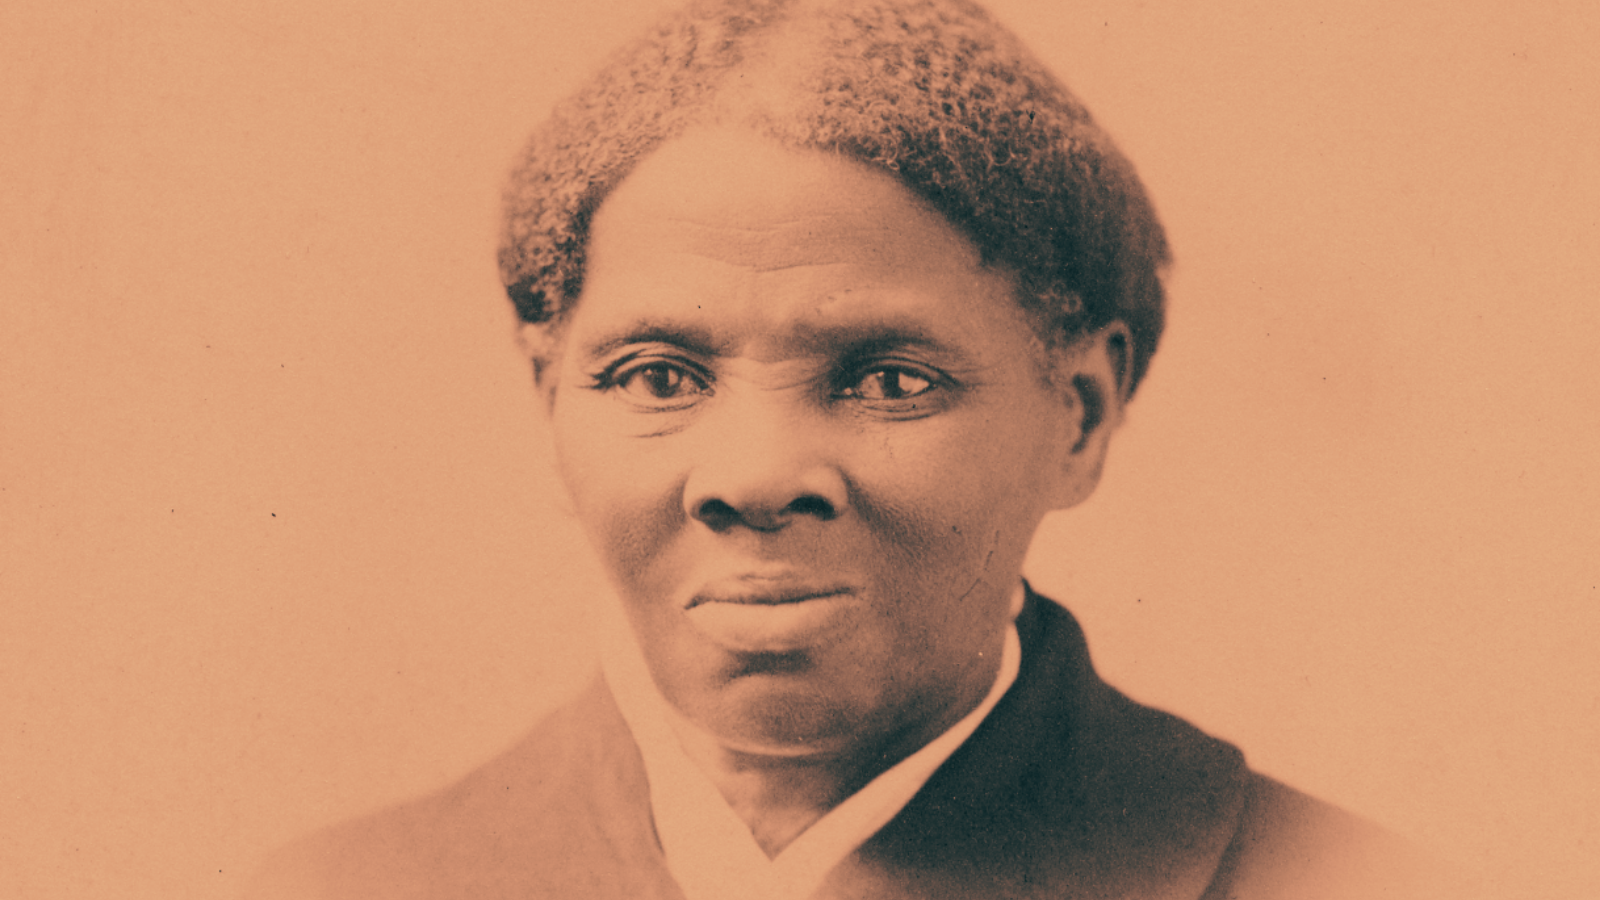 Harriet Tubman's Boston (U.S. National Park Service)